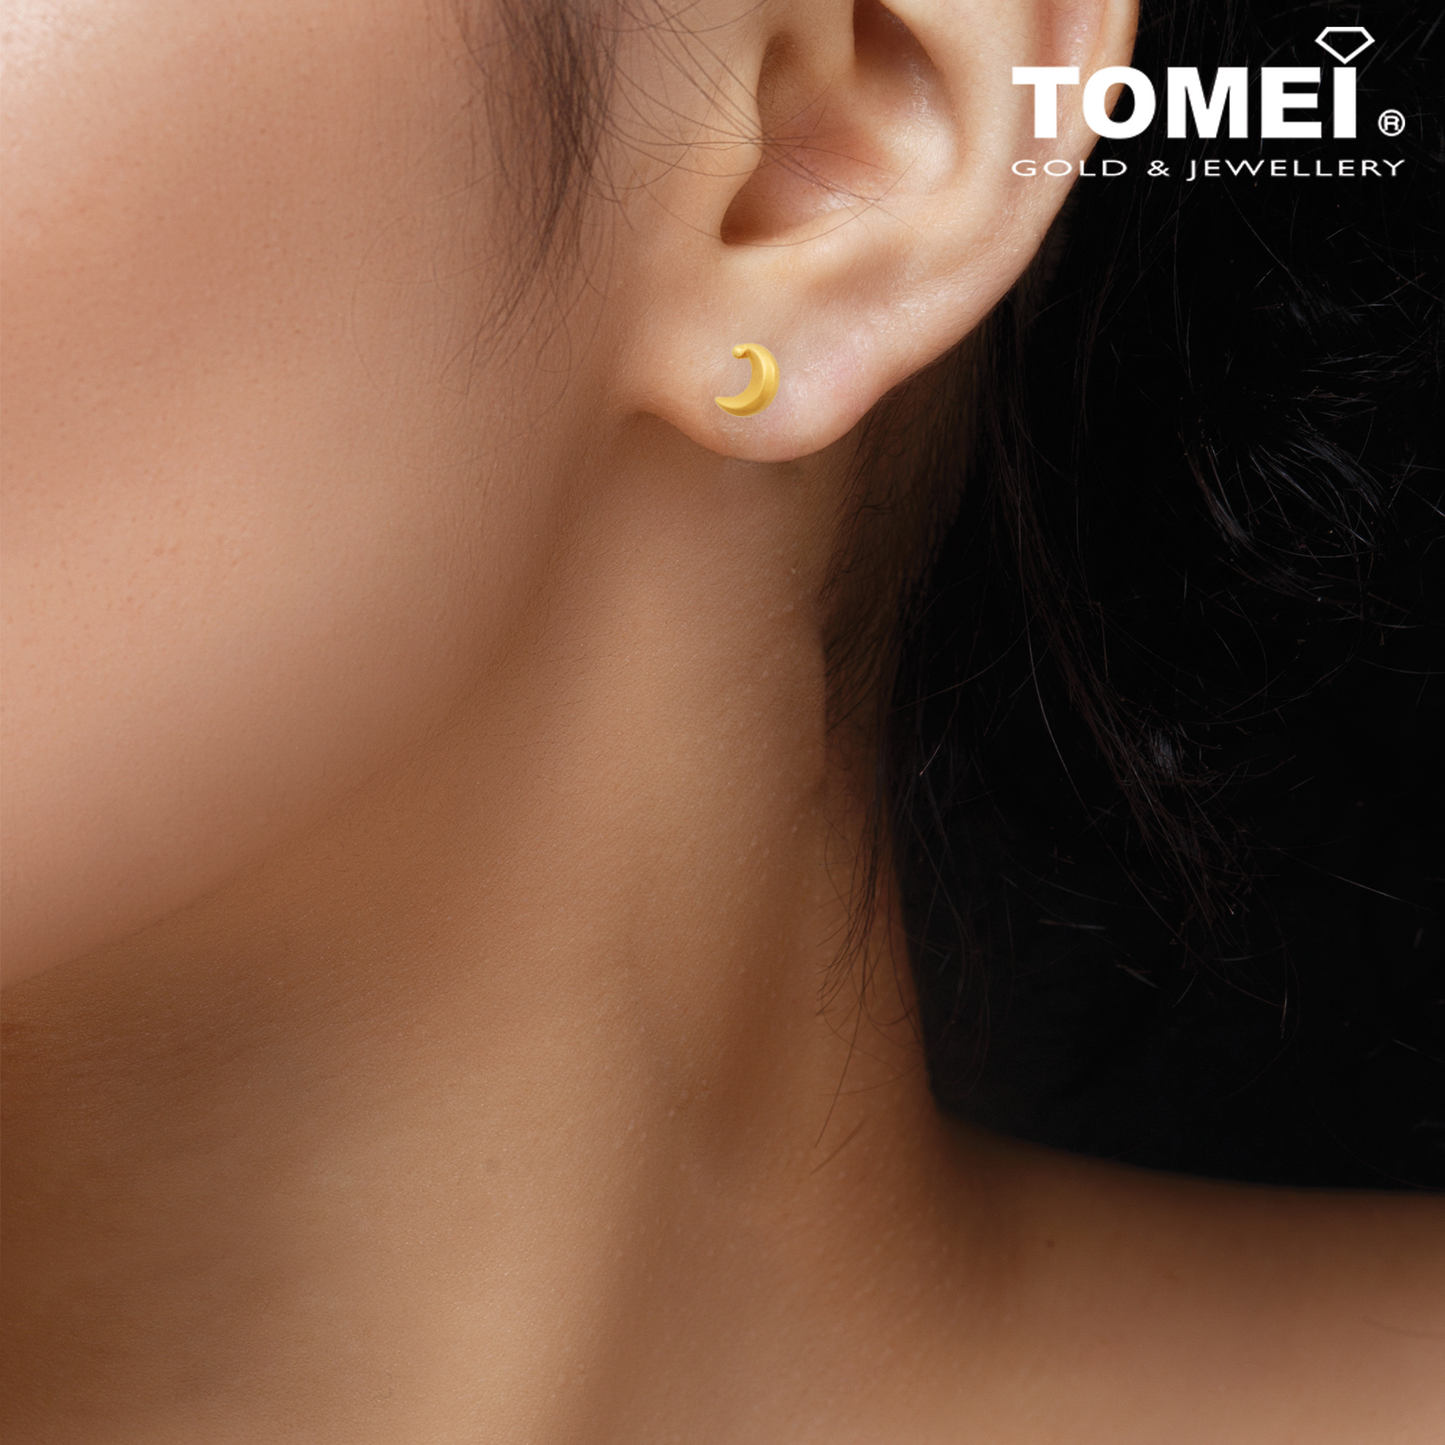 TOMEI Sun & Moon Earrings, Yellow Gold 916 (EE2841-1C)